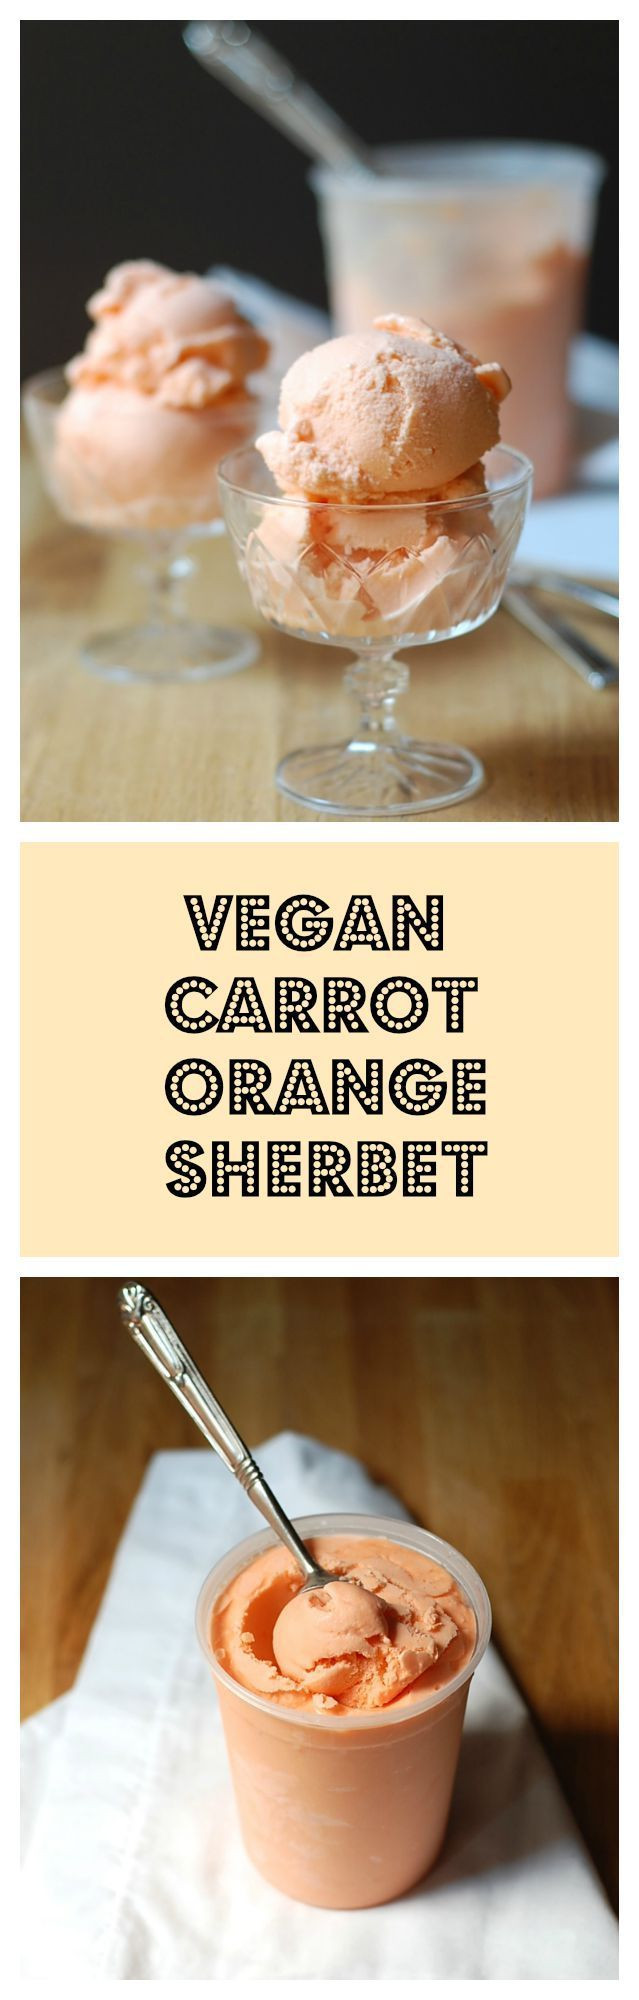 Vegan Dessert Recipes With Coconut Milk
 Vegan Carrot Orange Sherbet Recipe